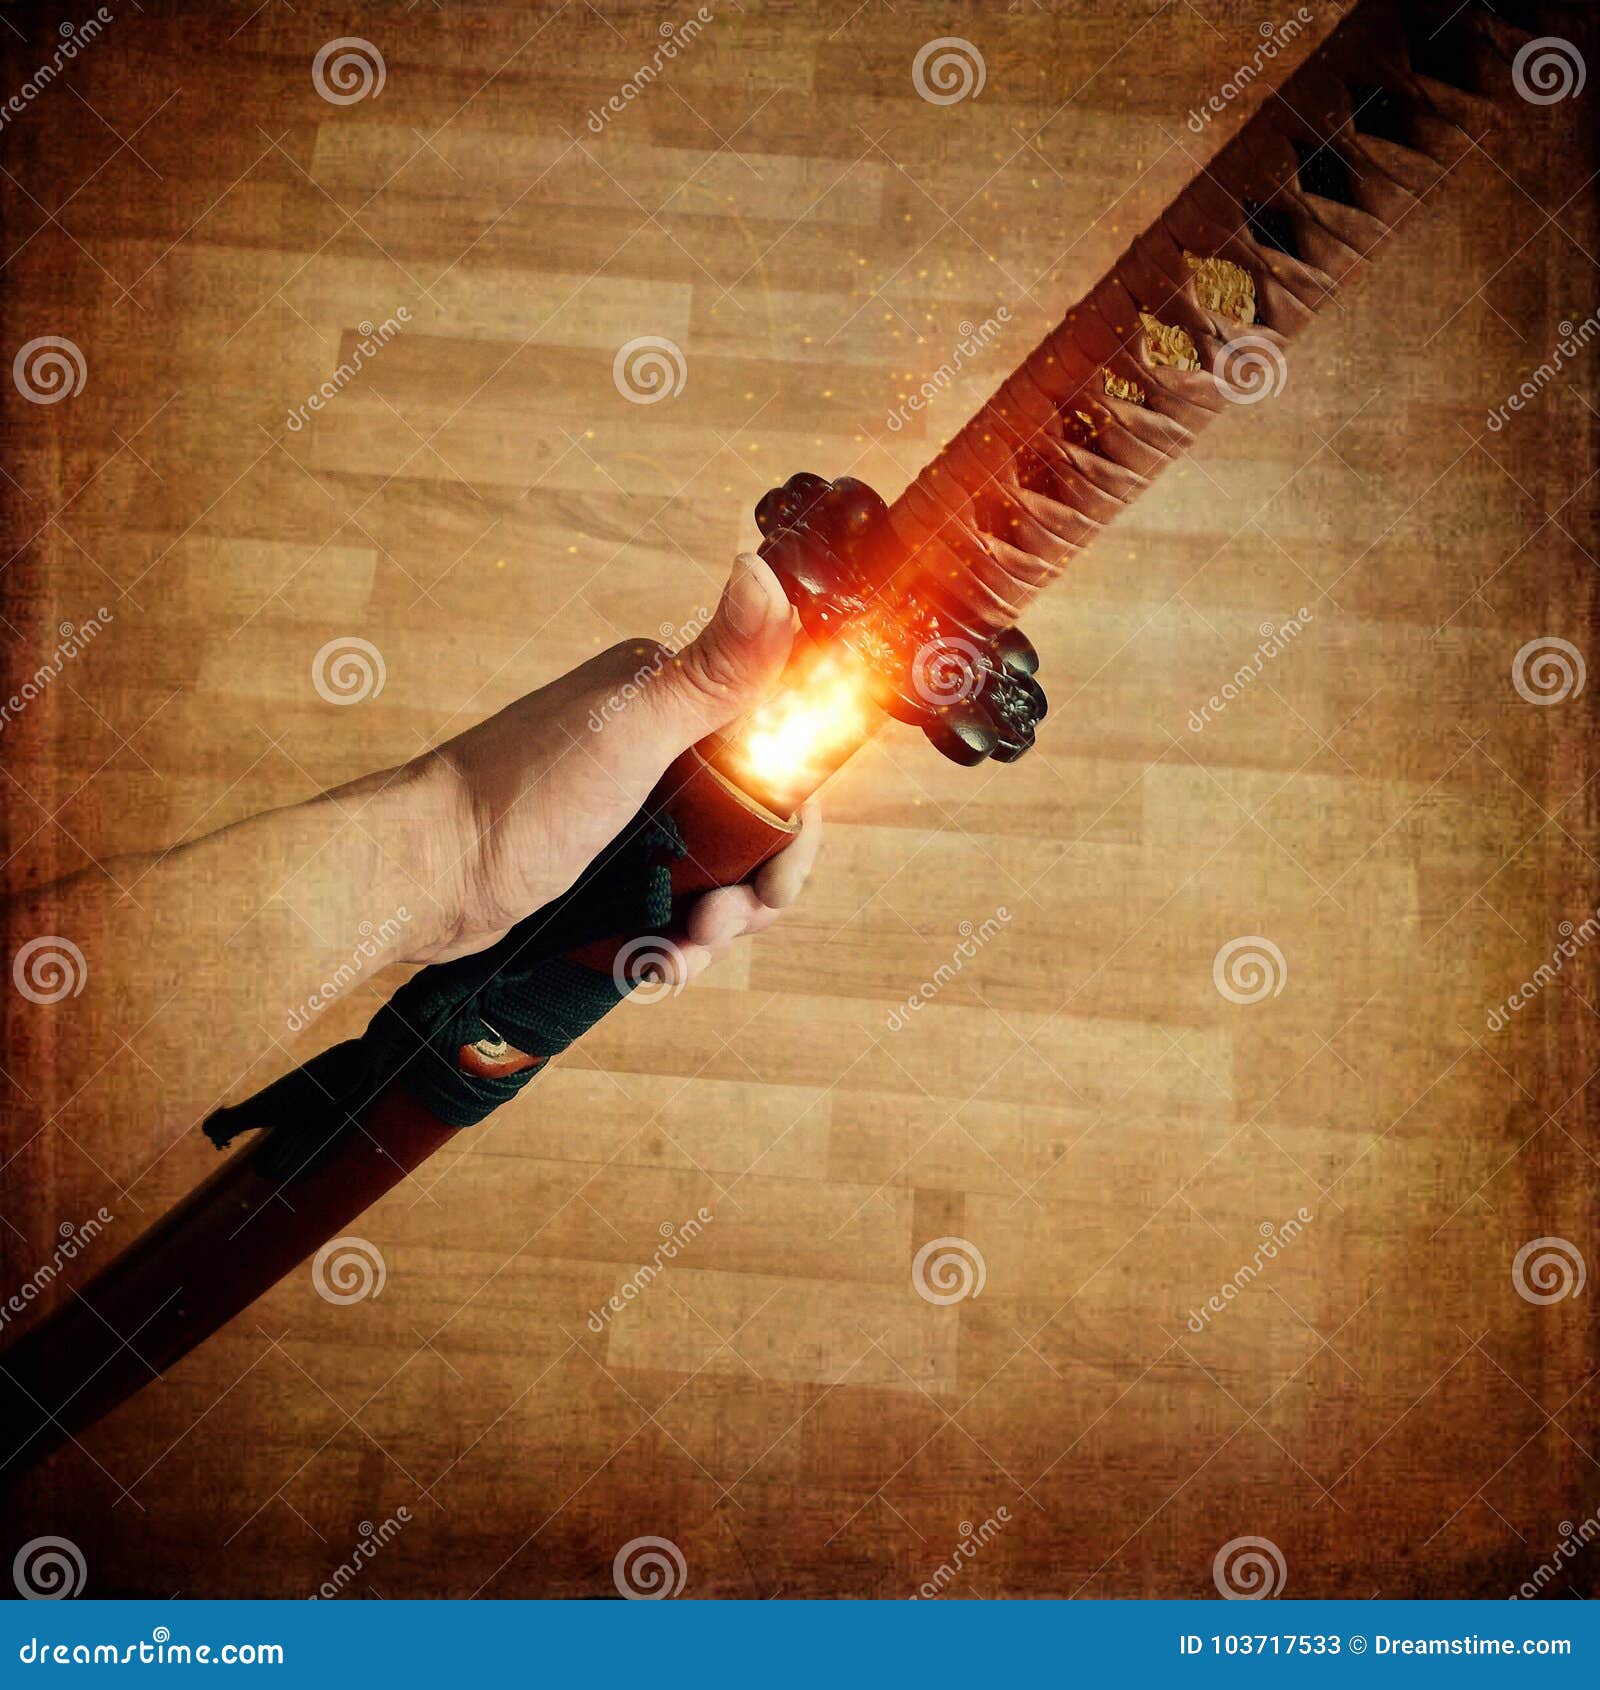 Samurai Katana Sword On Fire Stock Image - Image of katana 